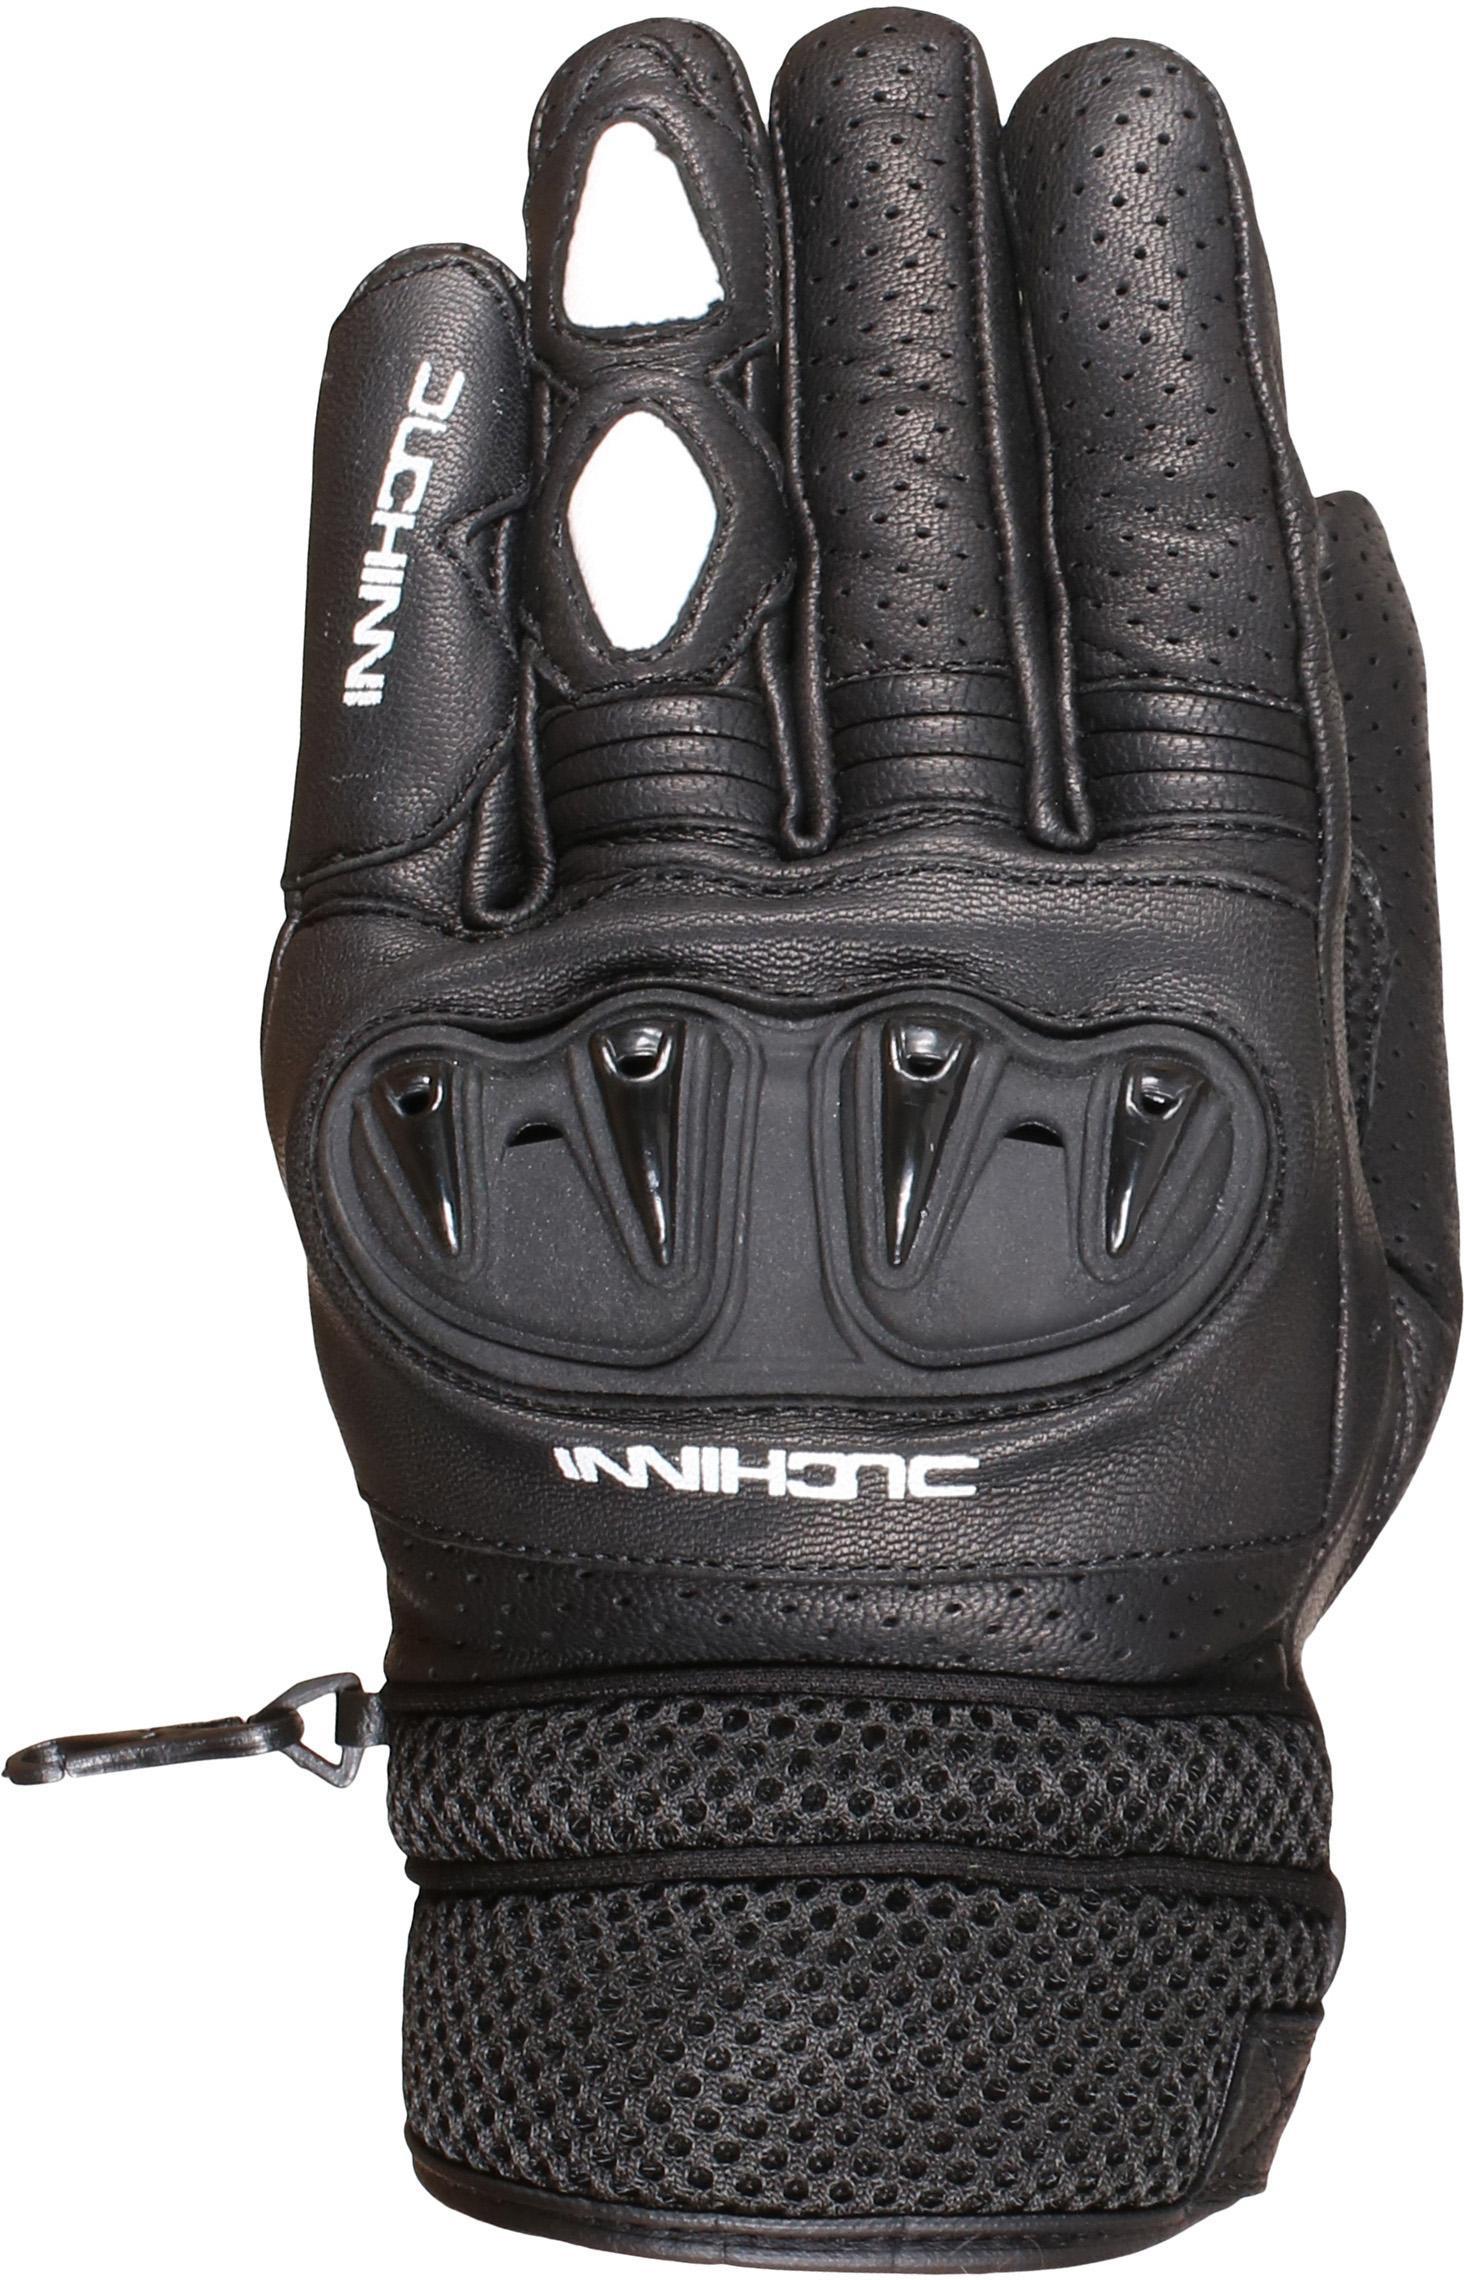 Duchinni Ostro Motorcycle Gloves - Black, 2Xl